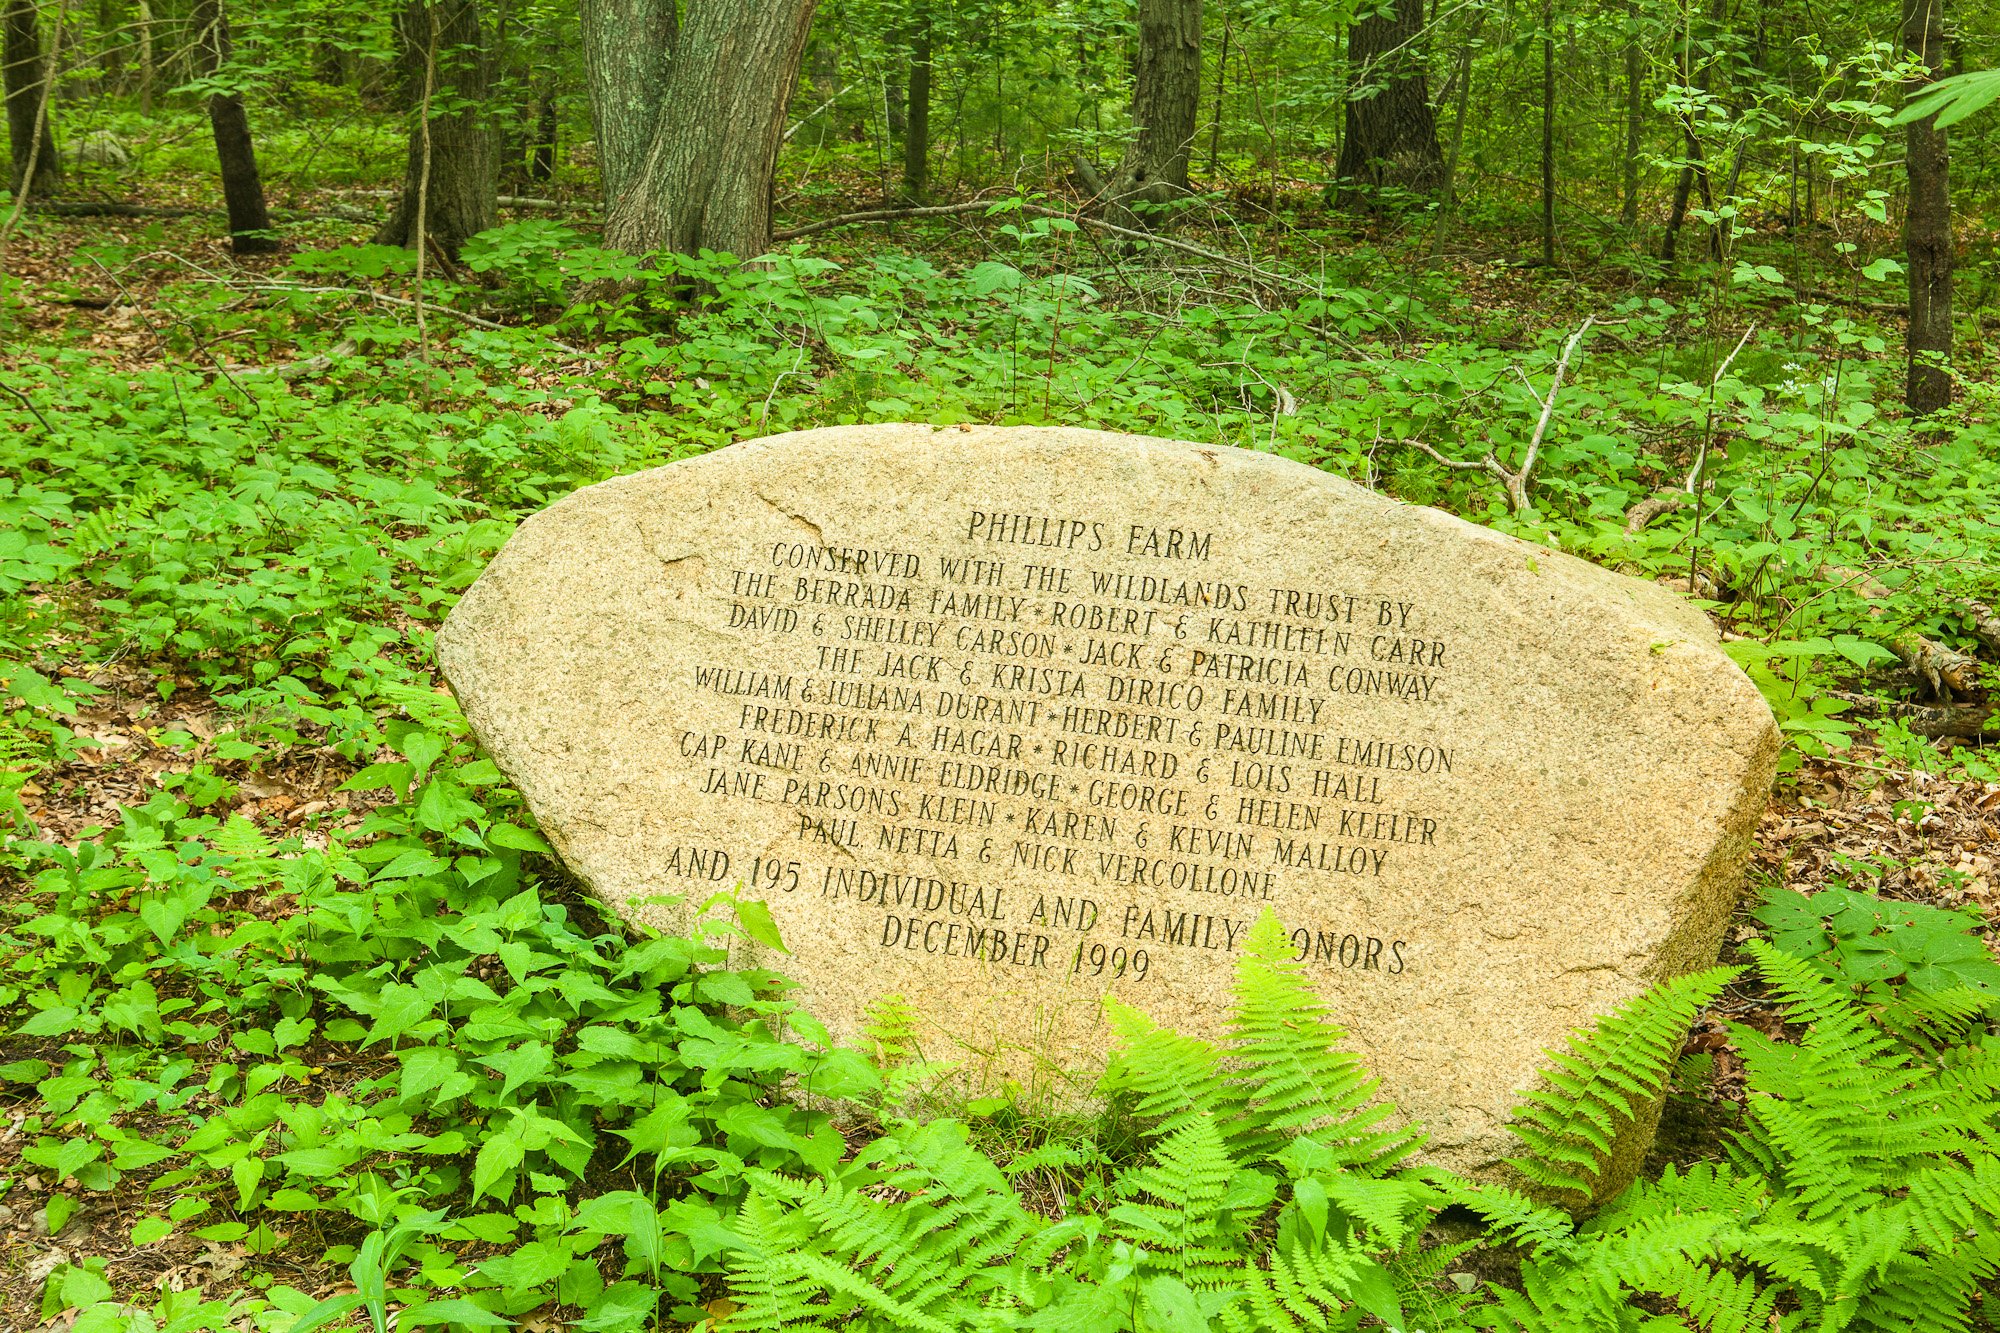  The monument dedicting the conservation of Phillips Farm in Marshfield, Massachusetts. 